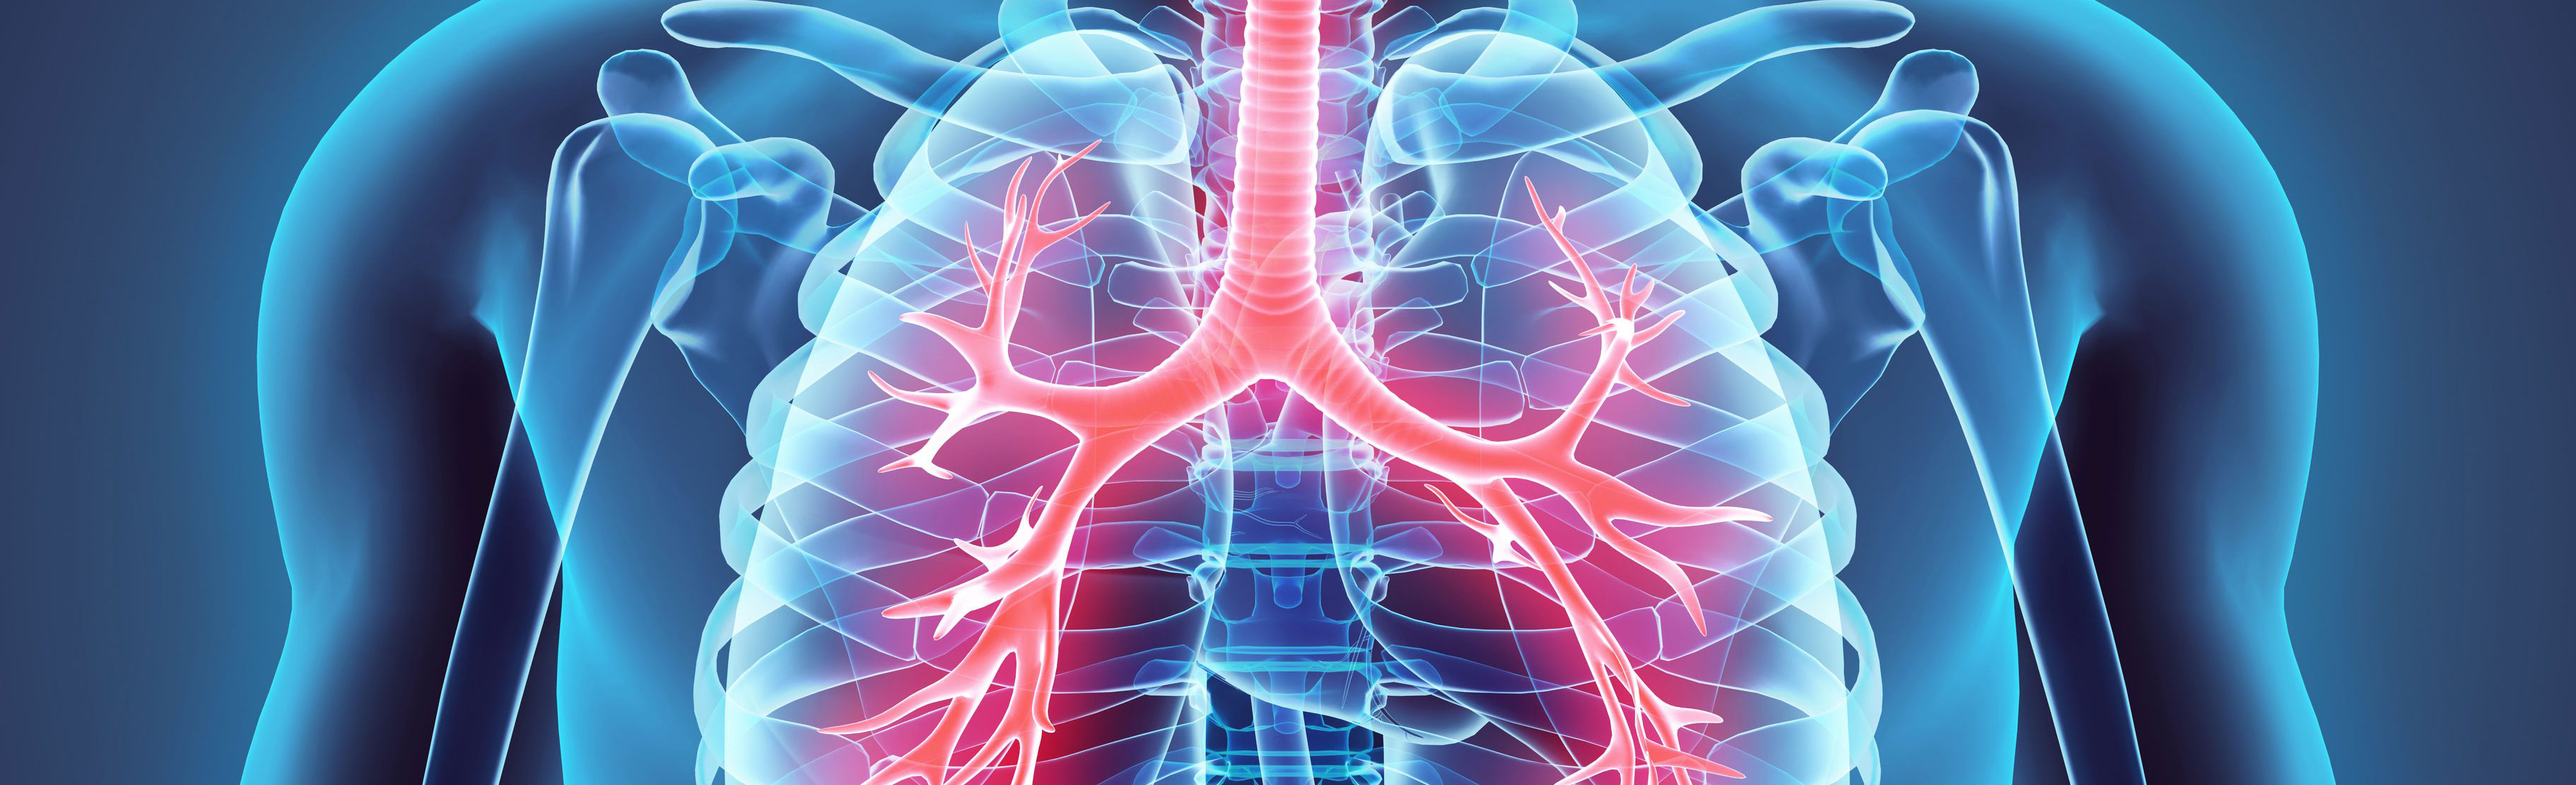 illustration of lungs in male torso | immunoprevention